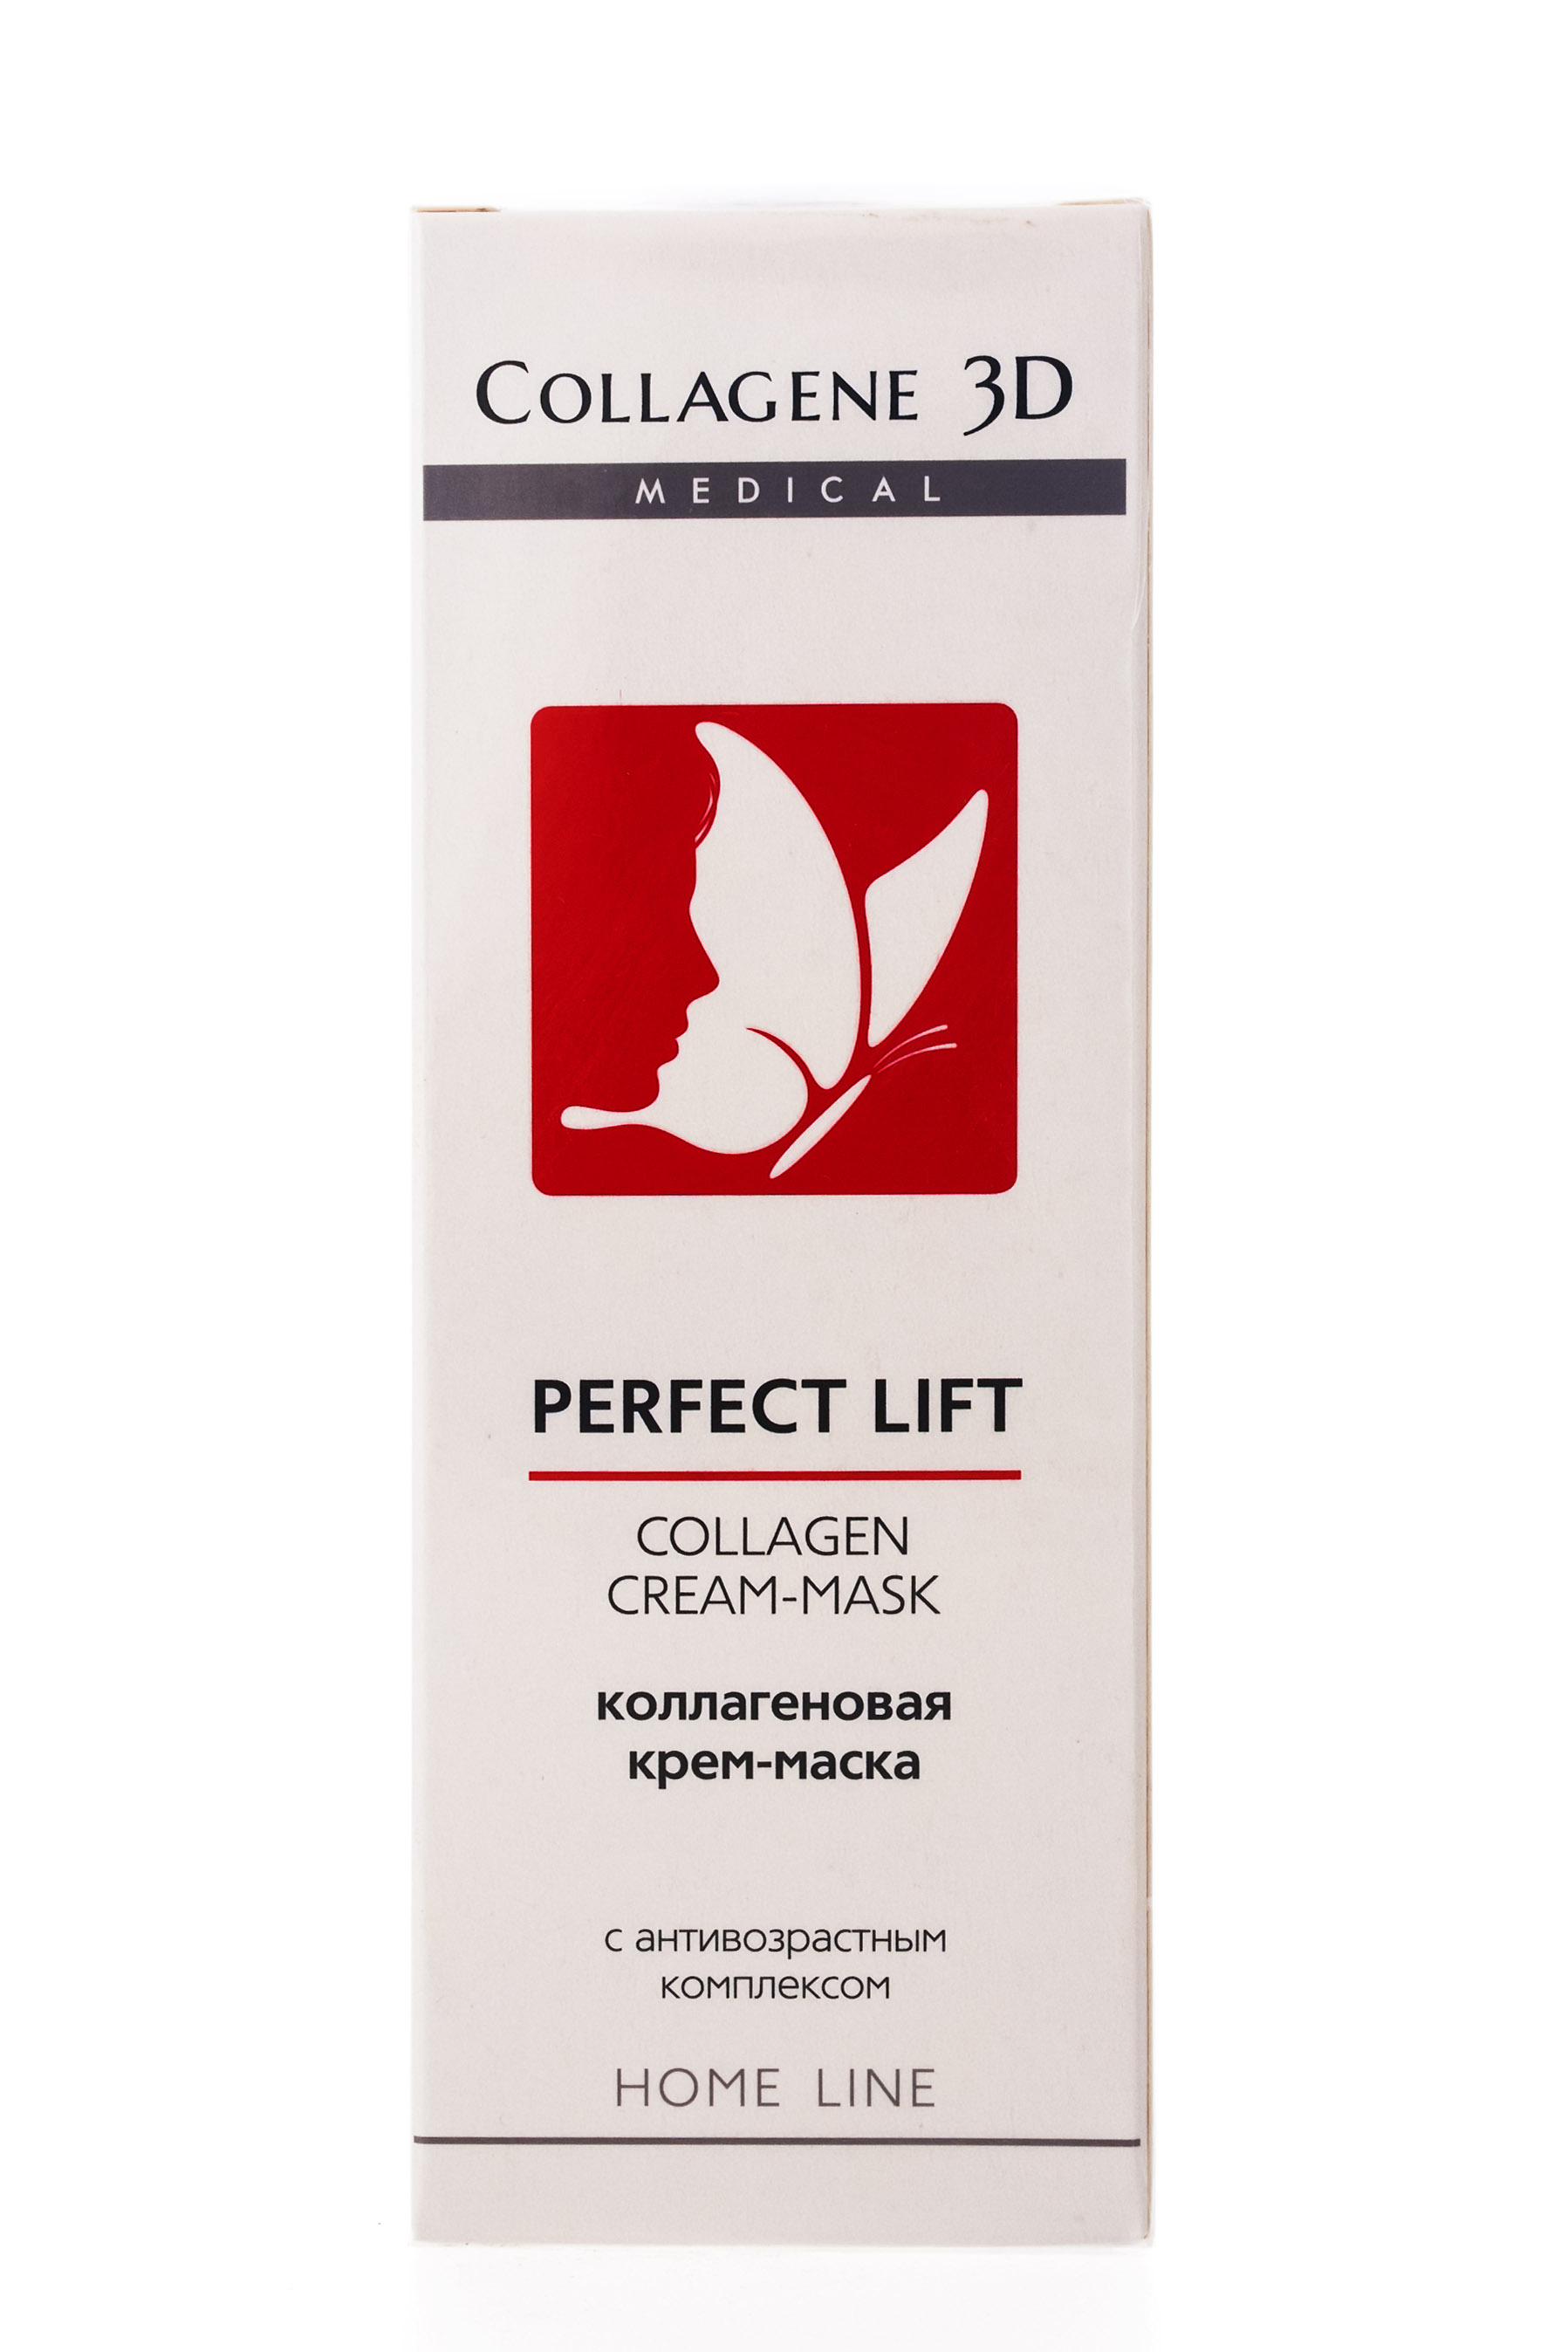 Маску лекс отзывы. Collagene 3d. Perfect крем для лица. Medical Collagene логотип. Коллаген Зд perfect Lift.